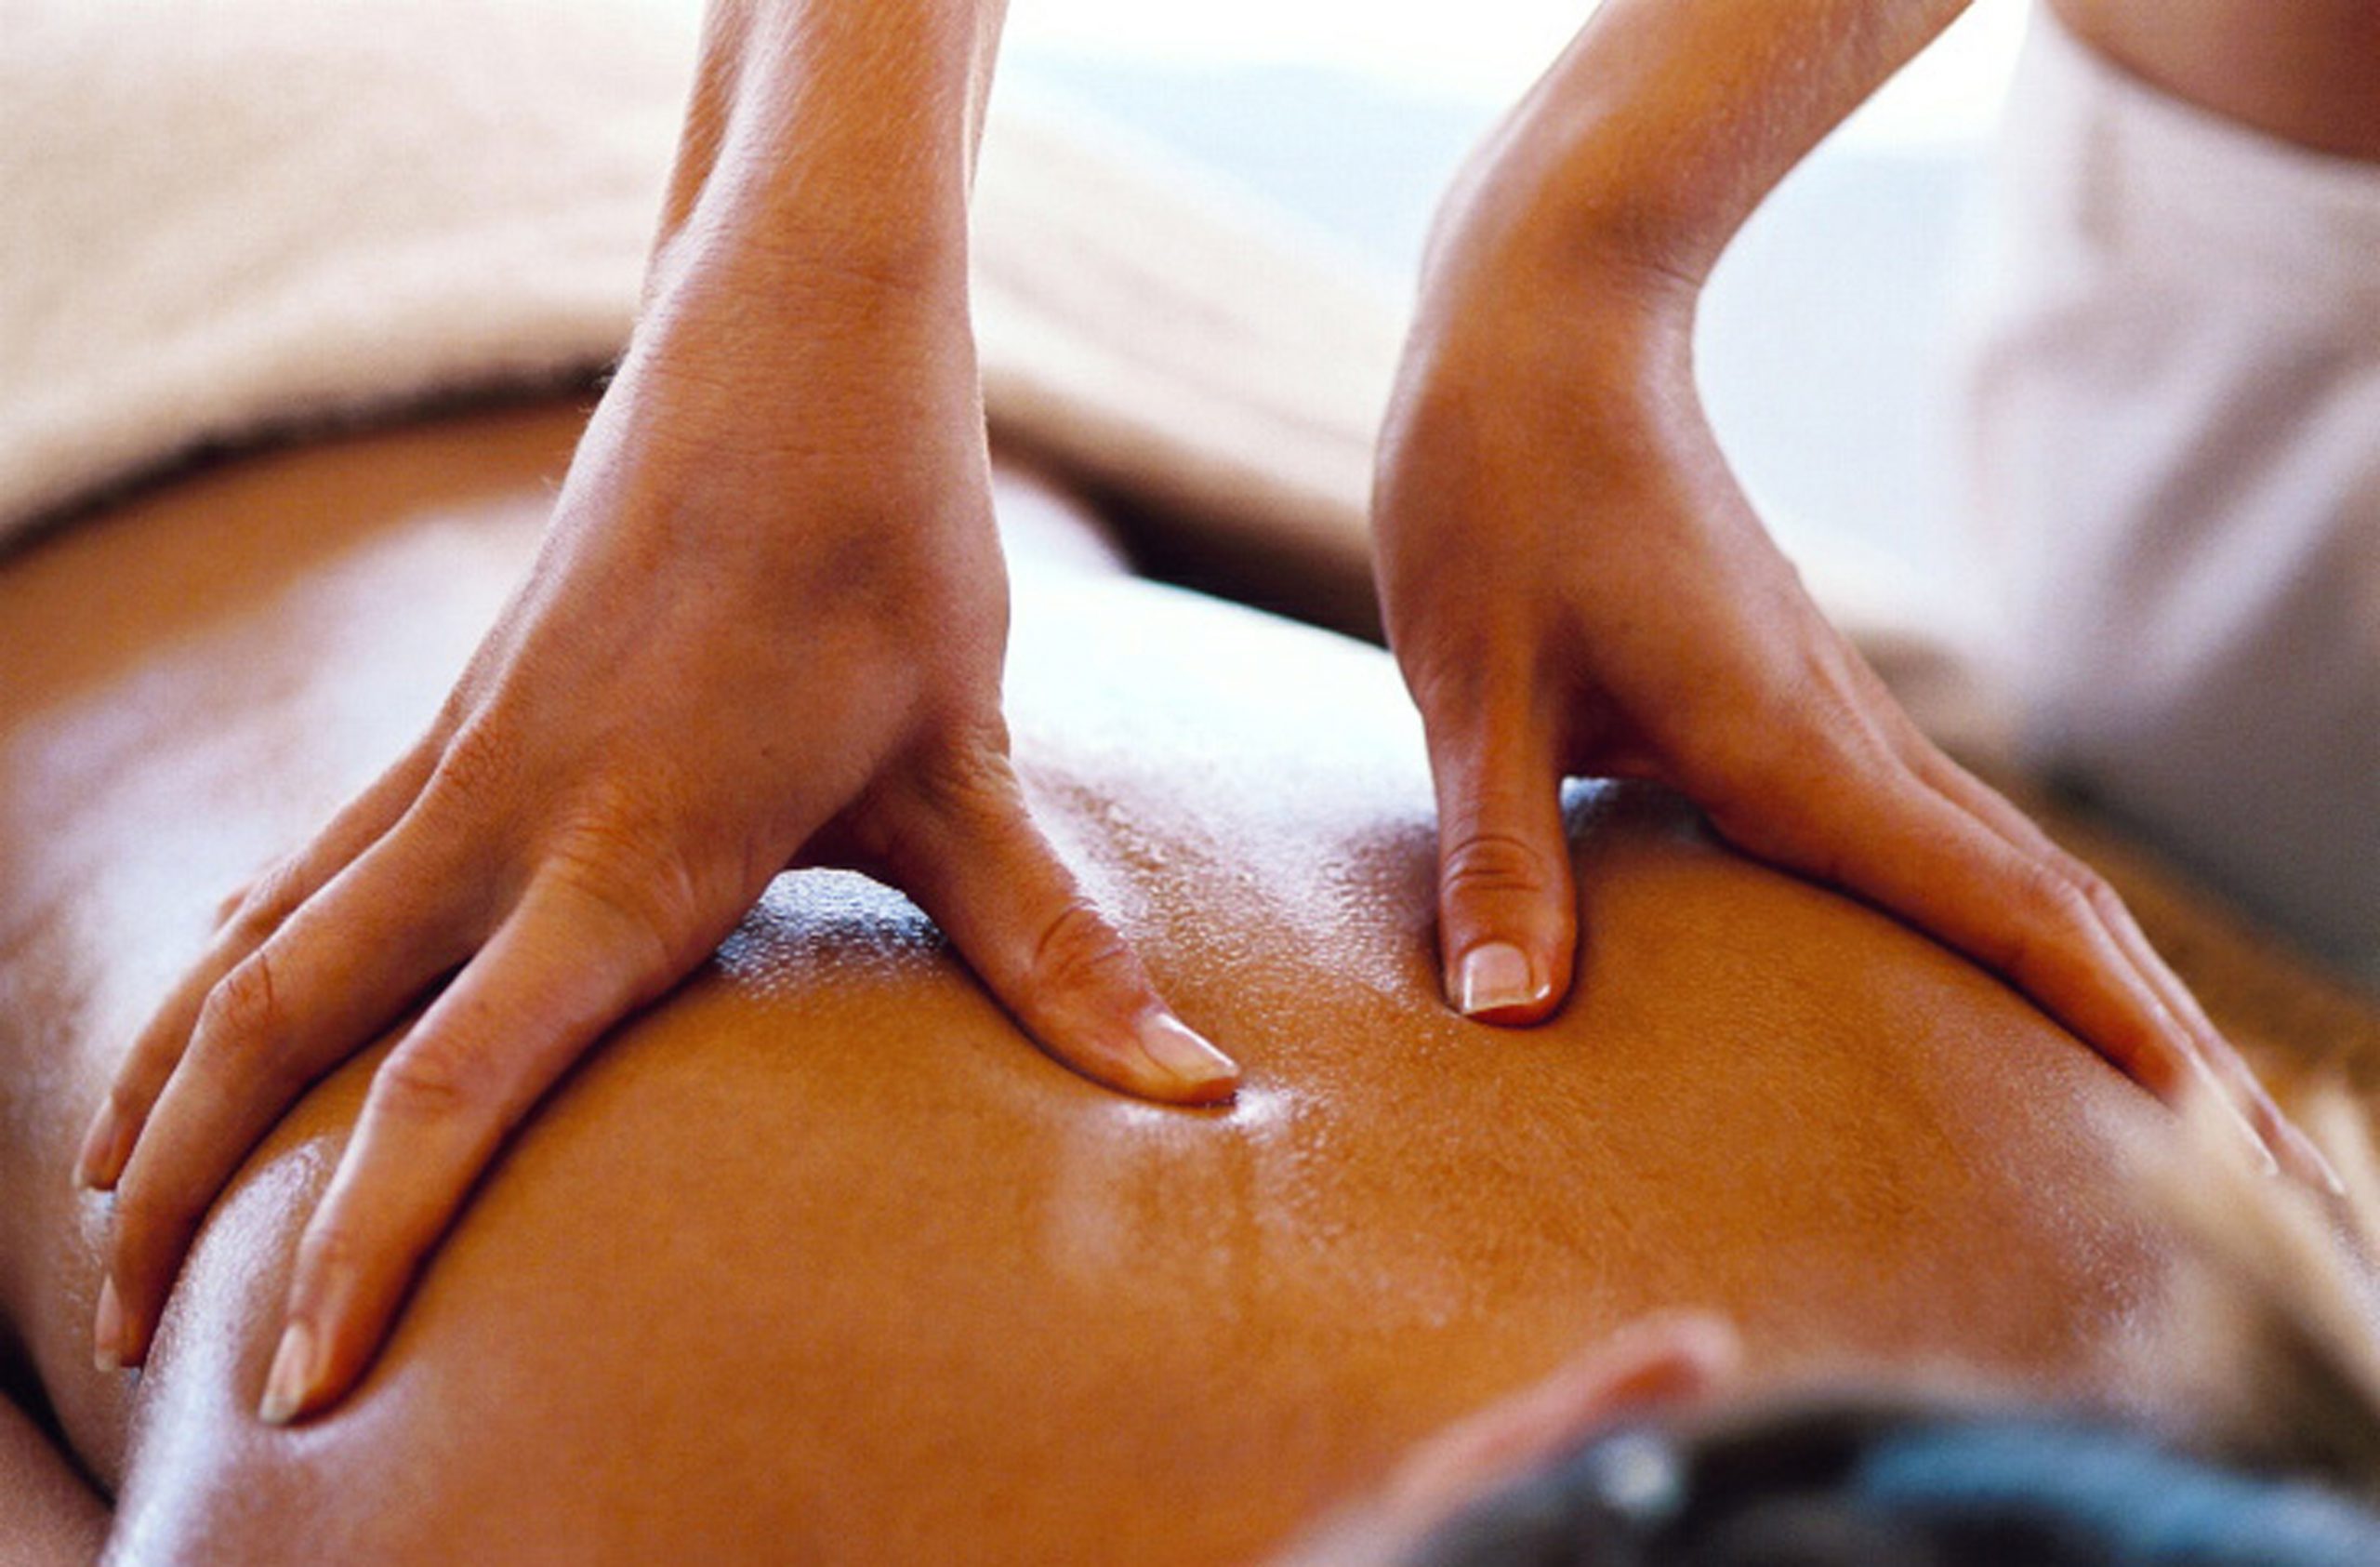 Massage Paphos